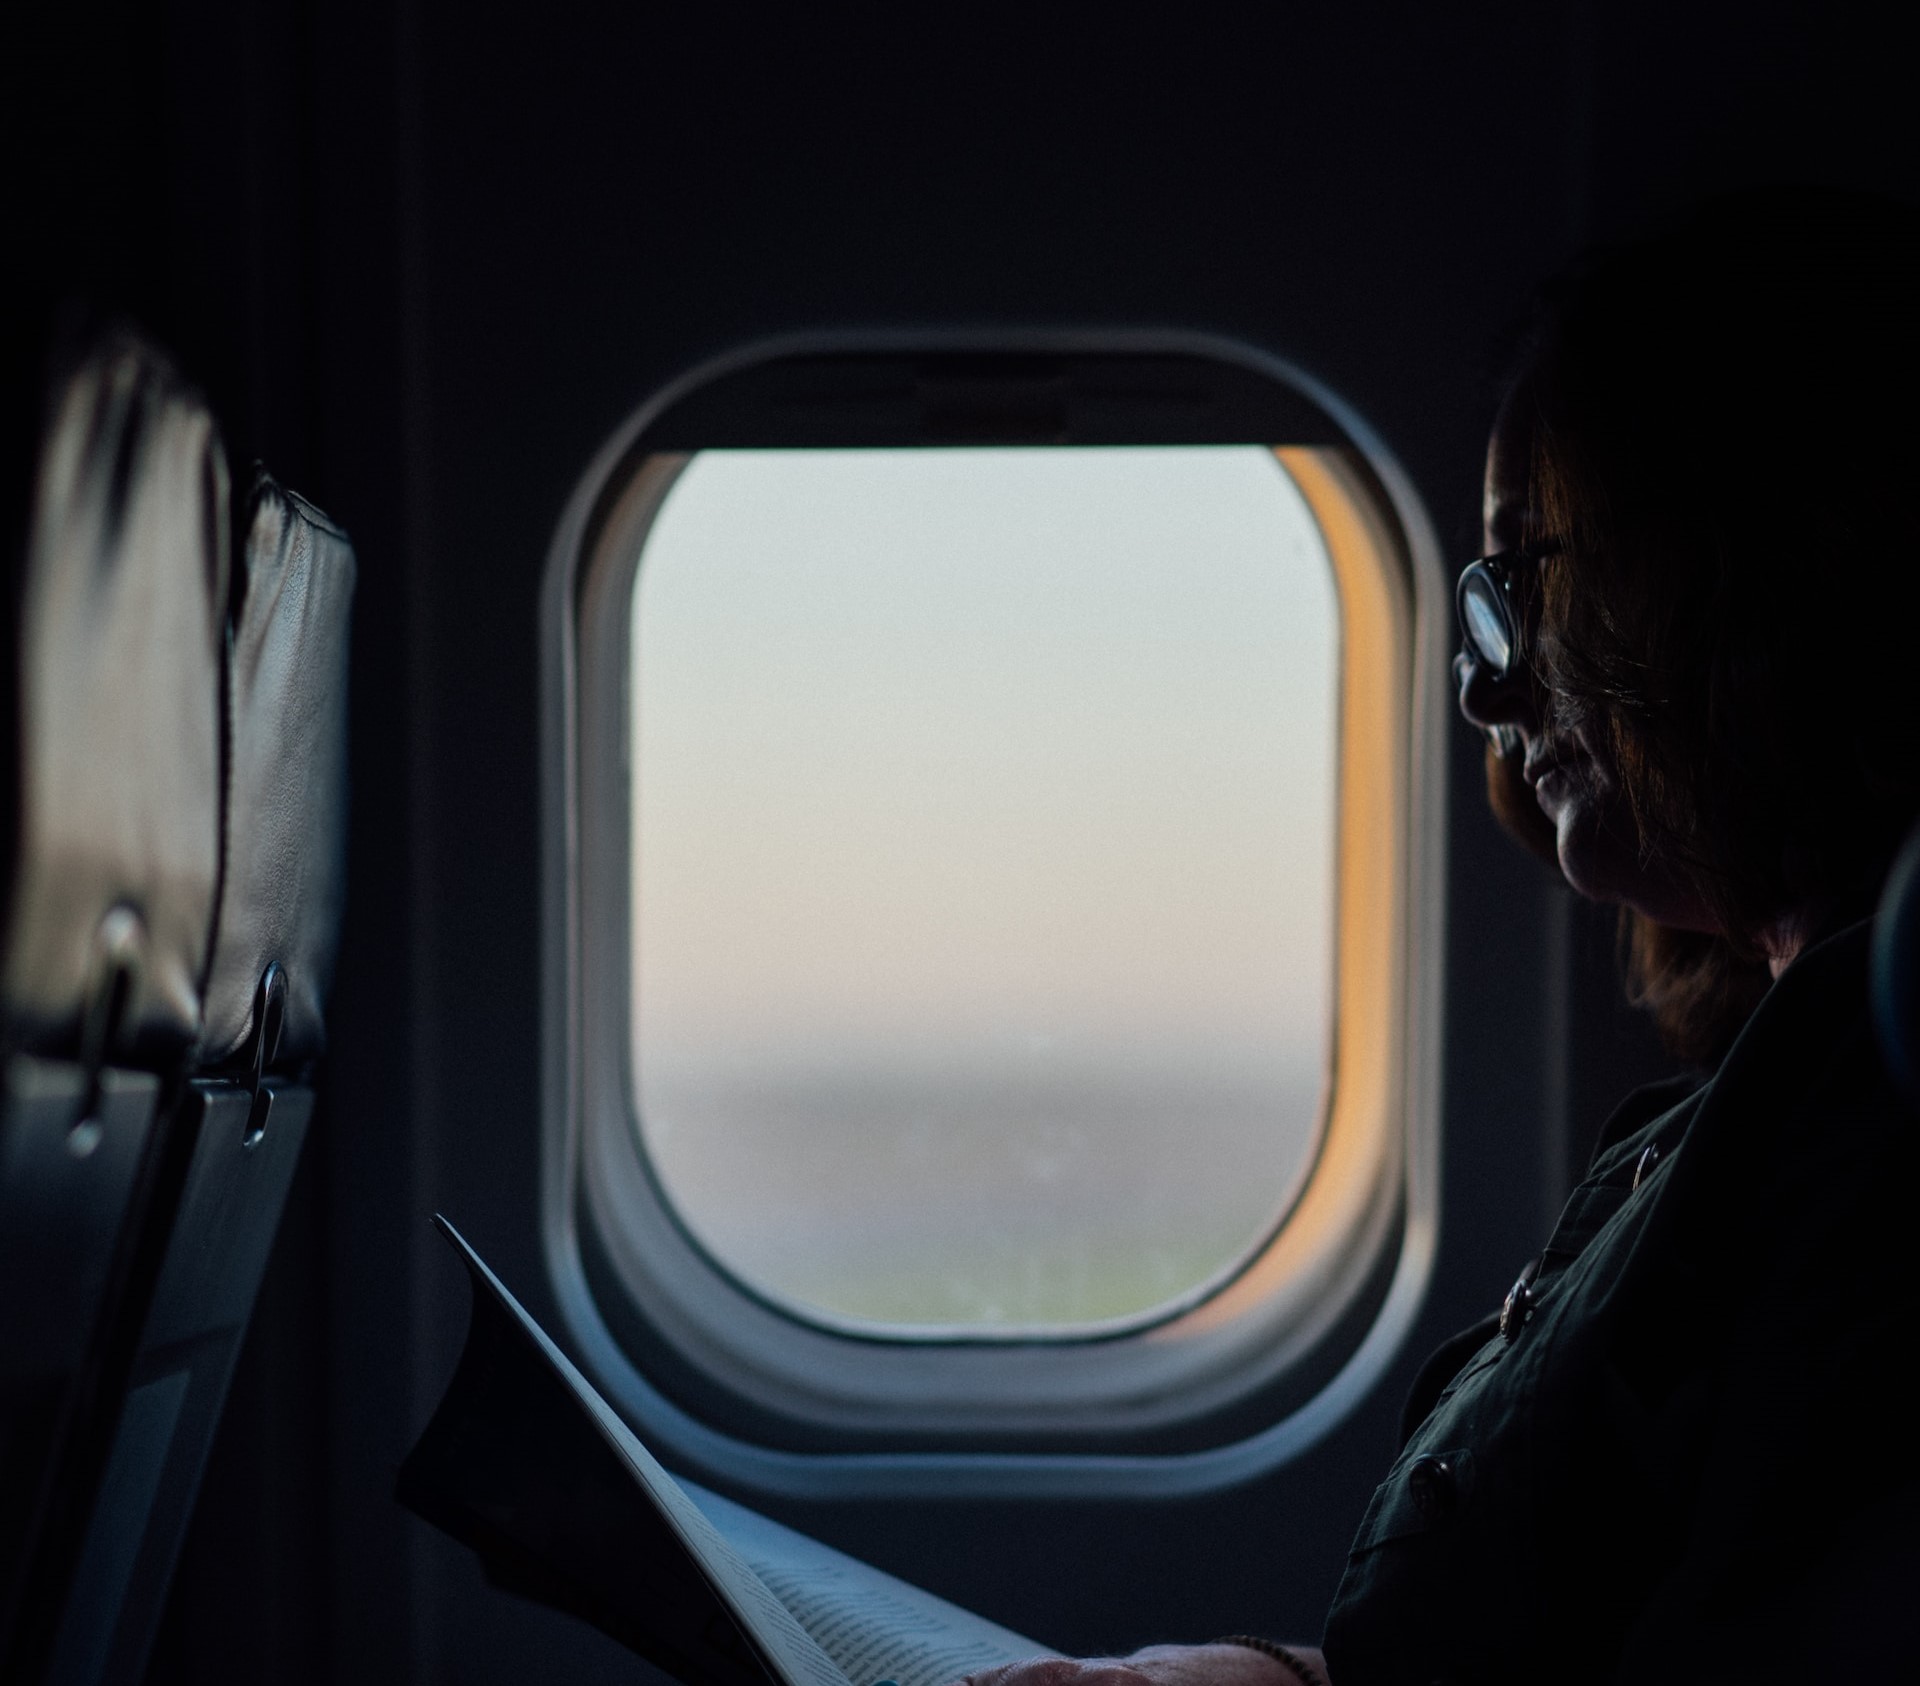 A plane window